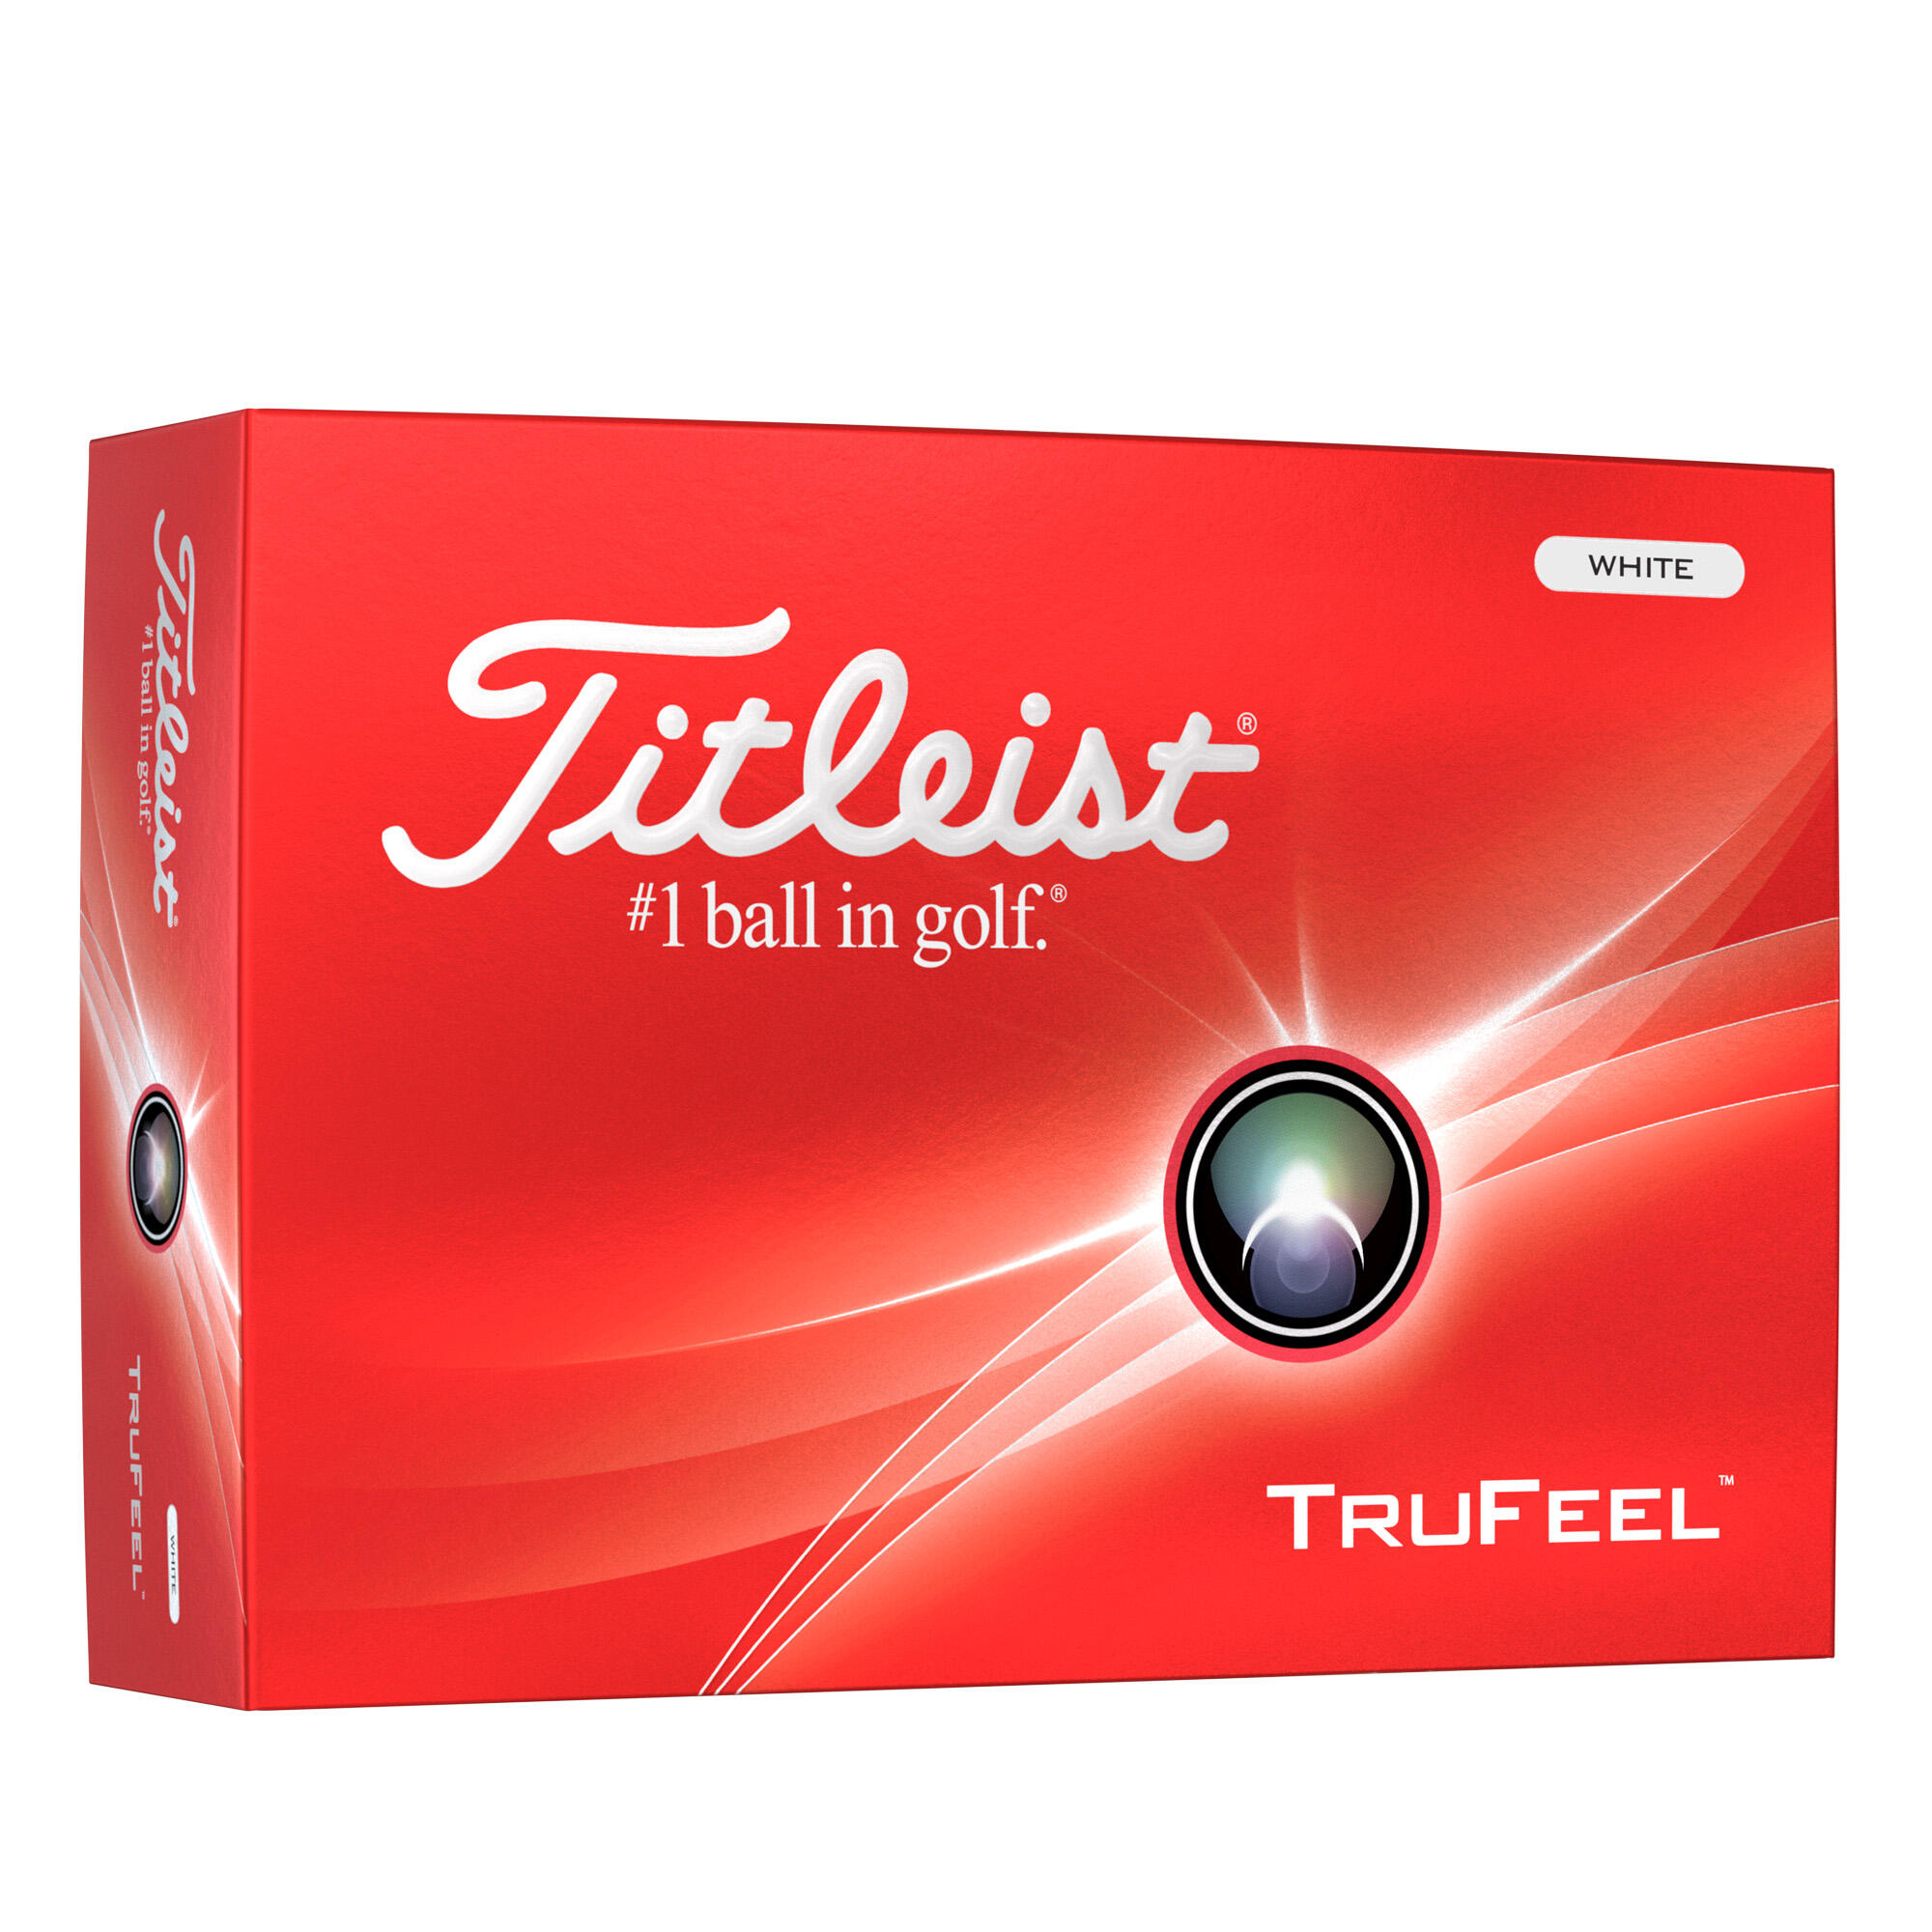 TITLEIST Golf Ball x12 - TITLEIST Trufeel White